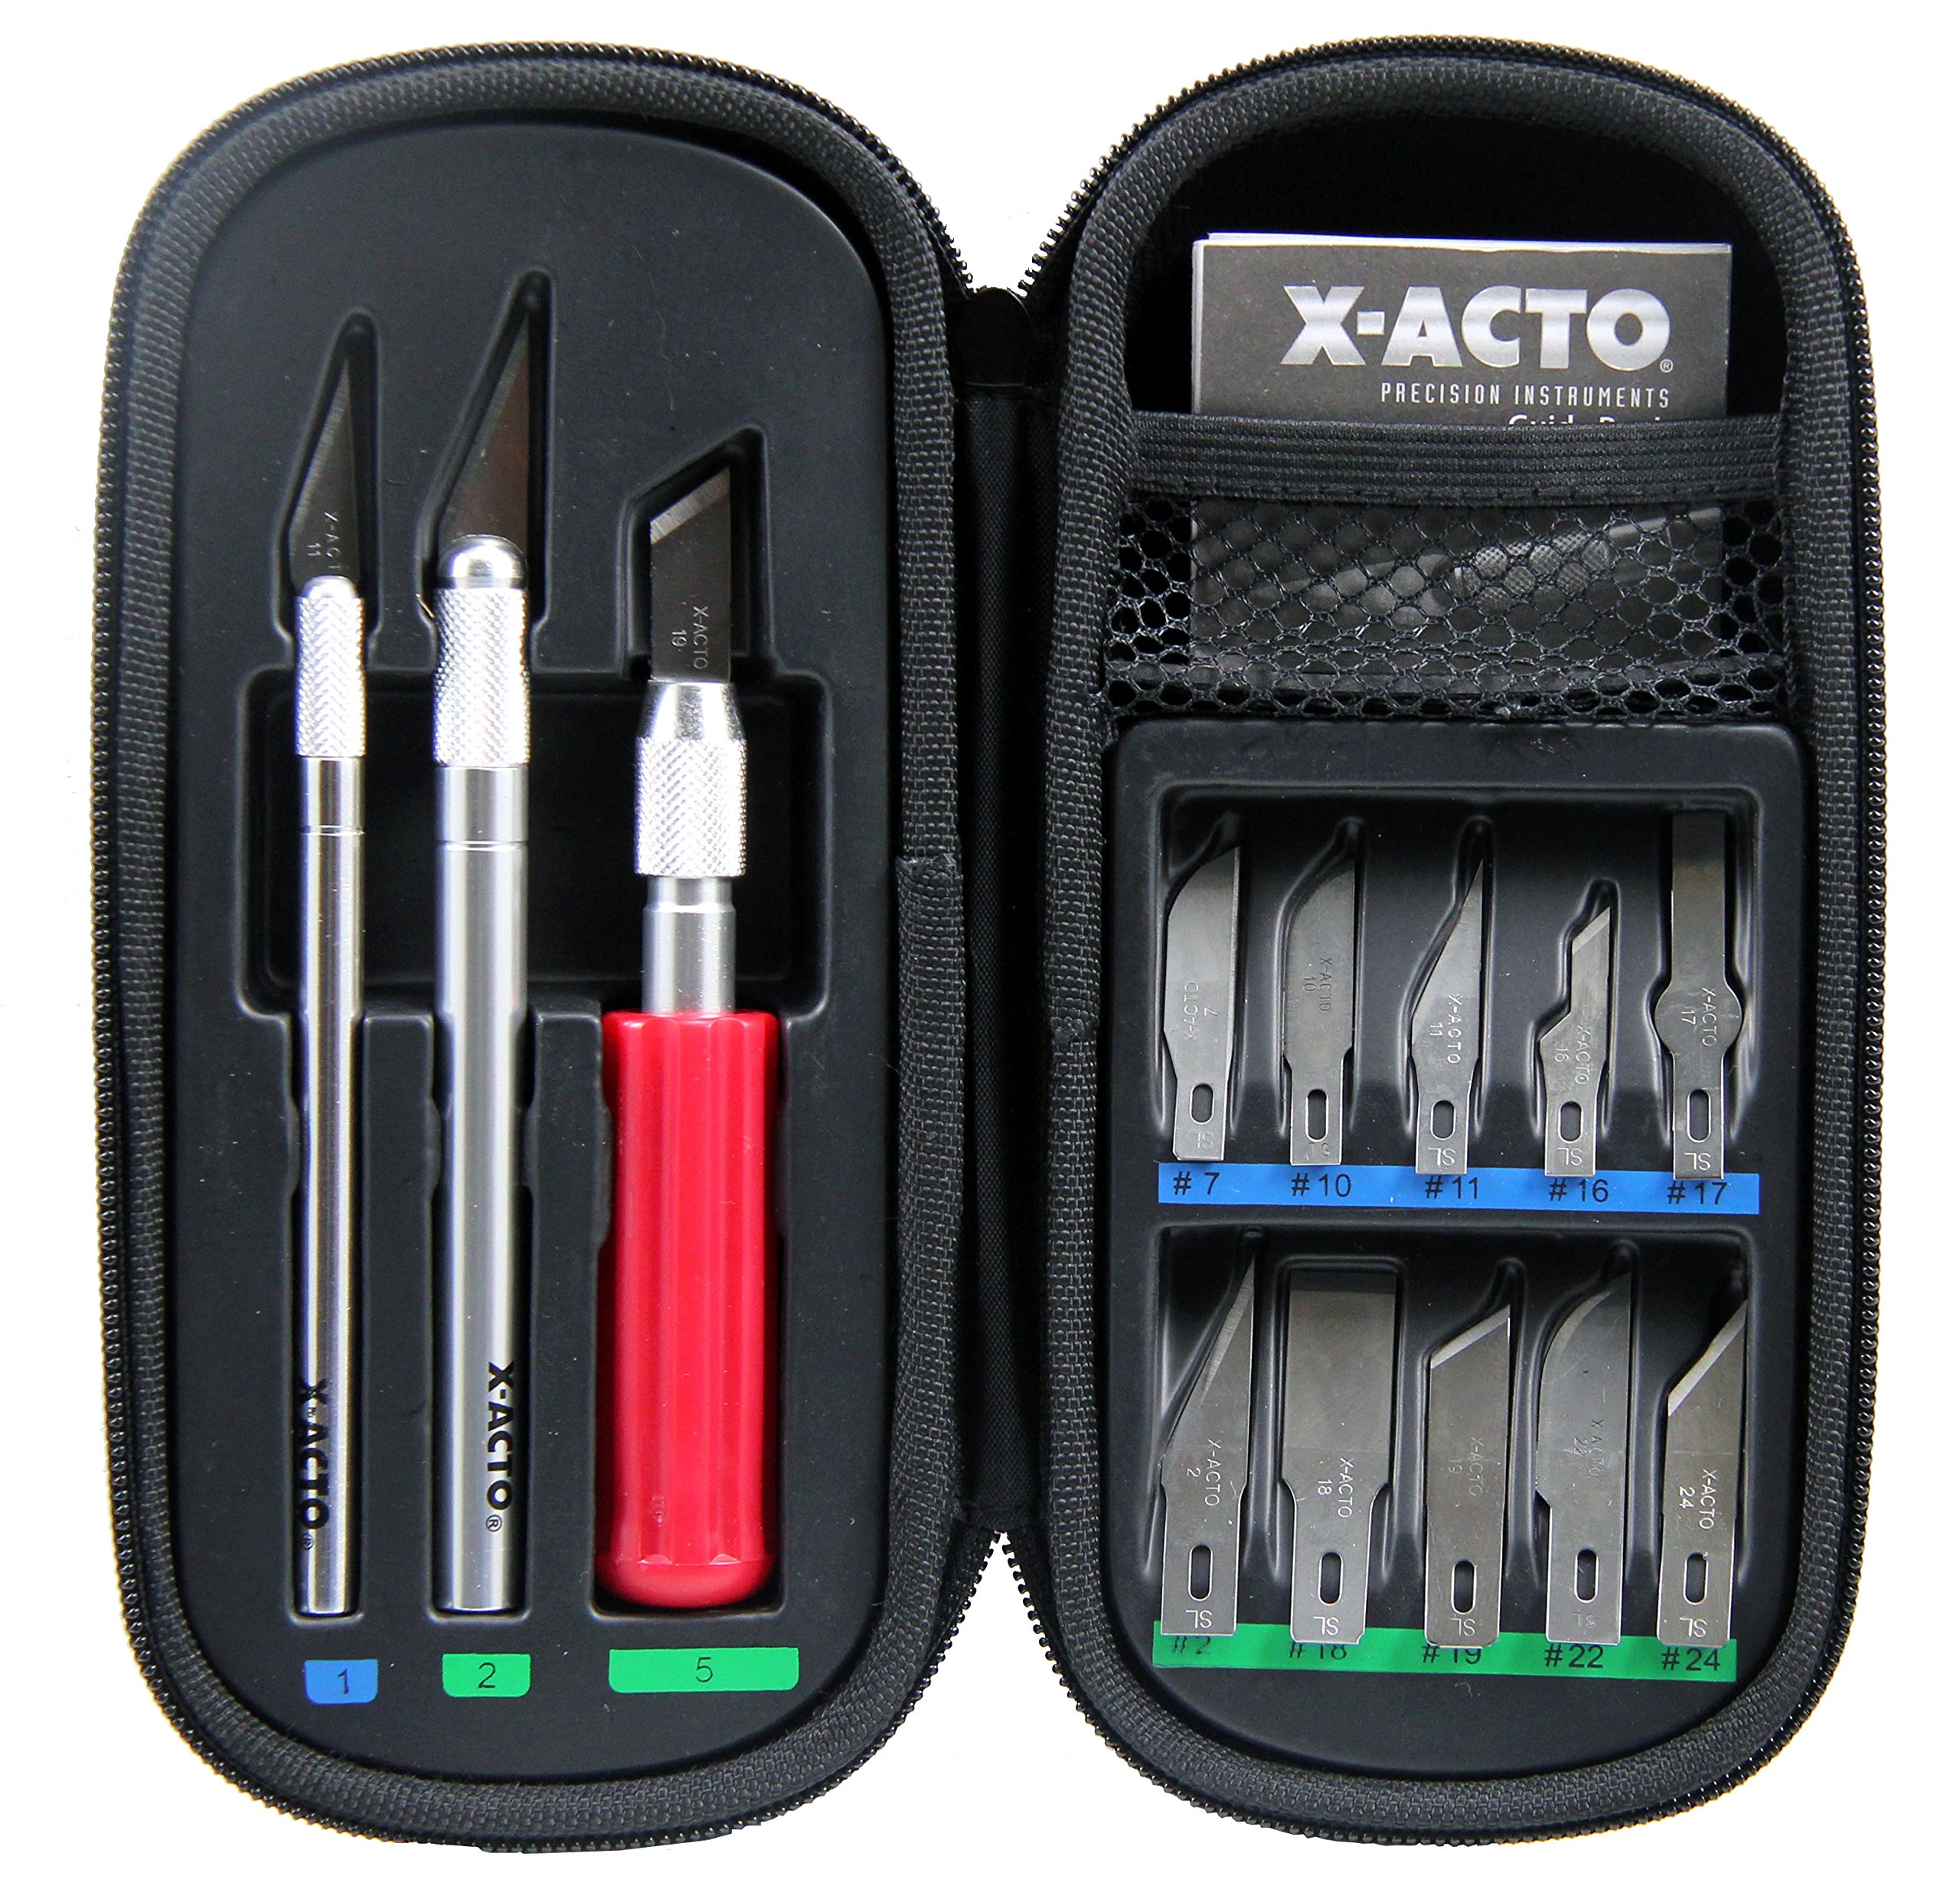 X-ACTO Compression Basic Knife Set - $5.75 at Amazon